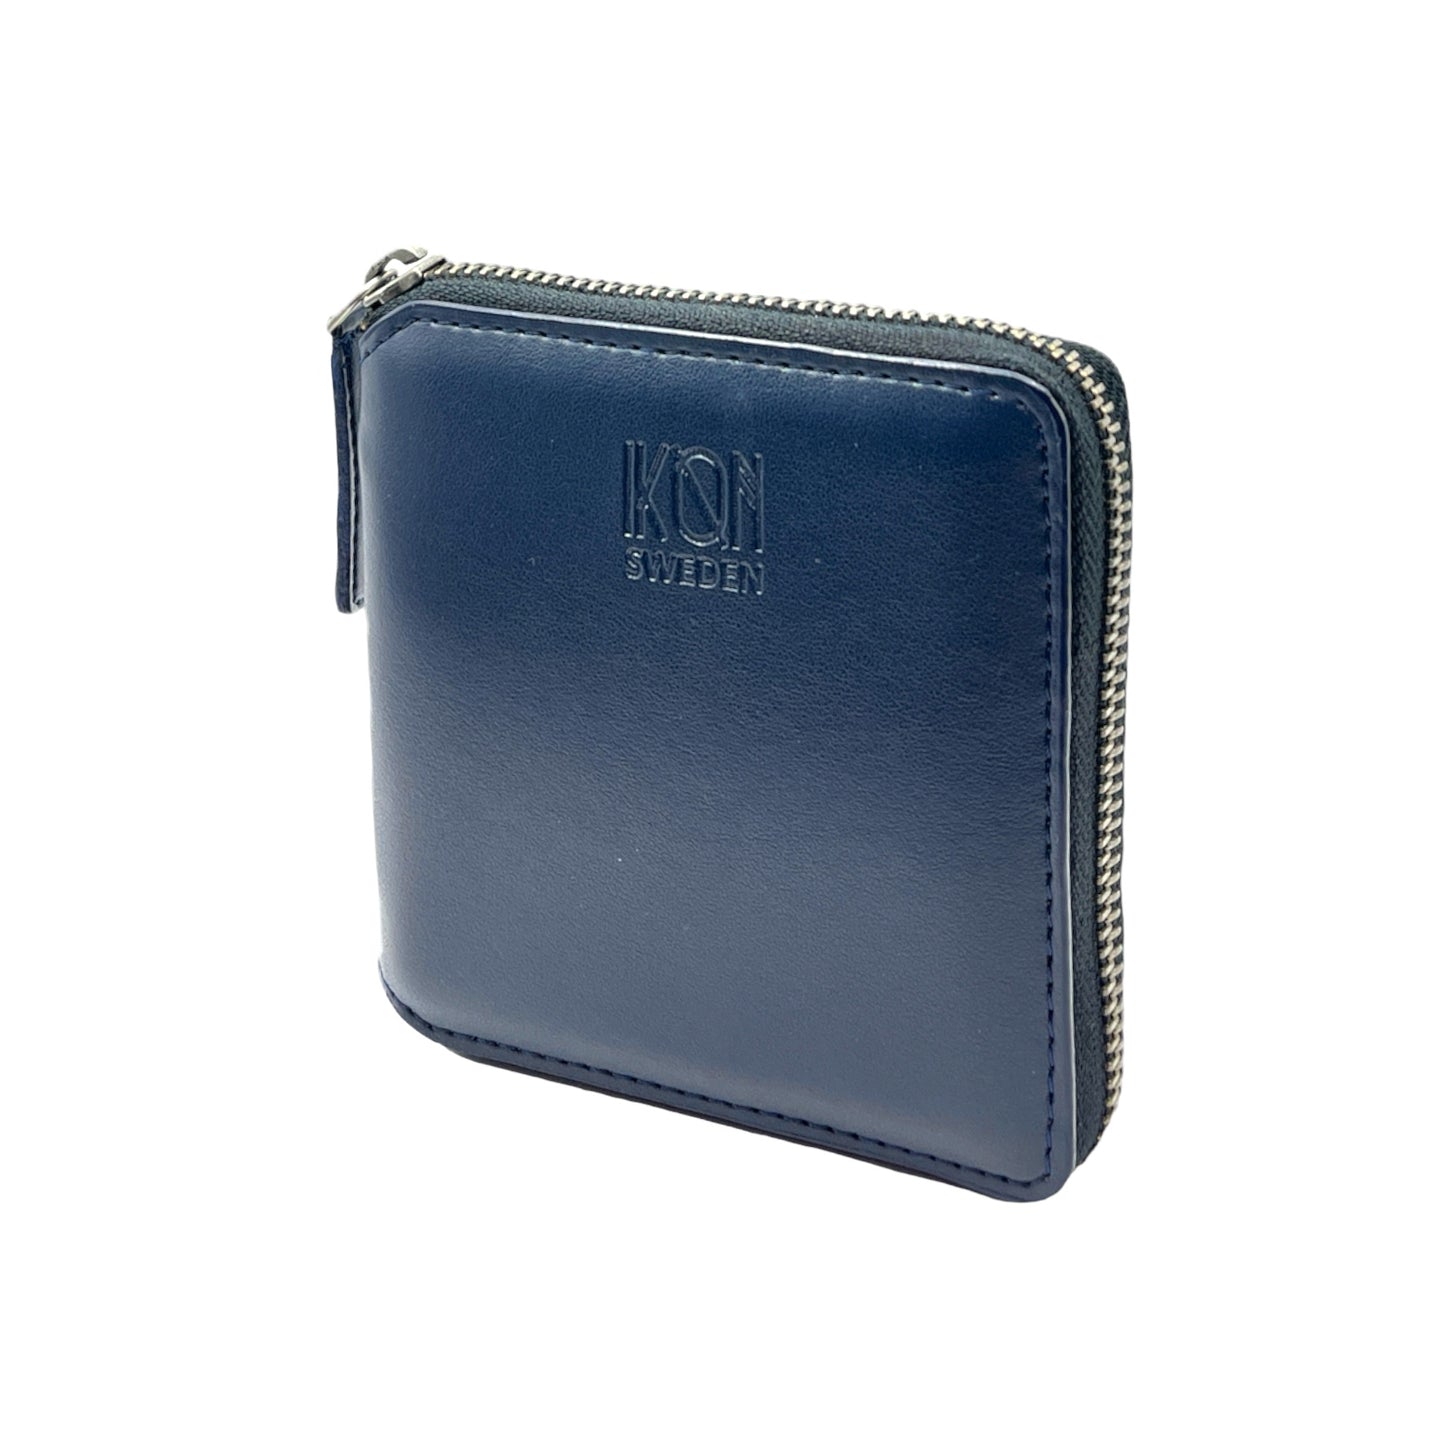 Coastal Blue small zip wallet